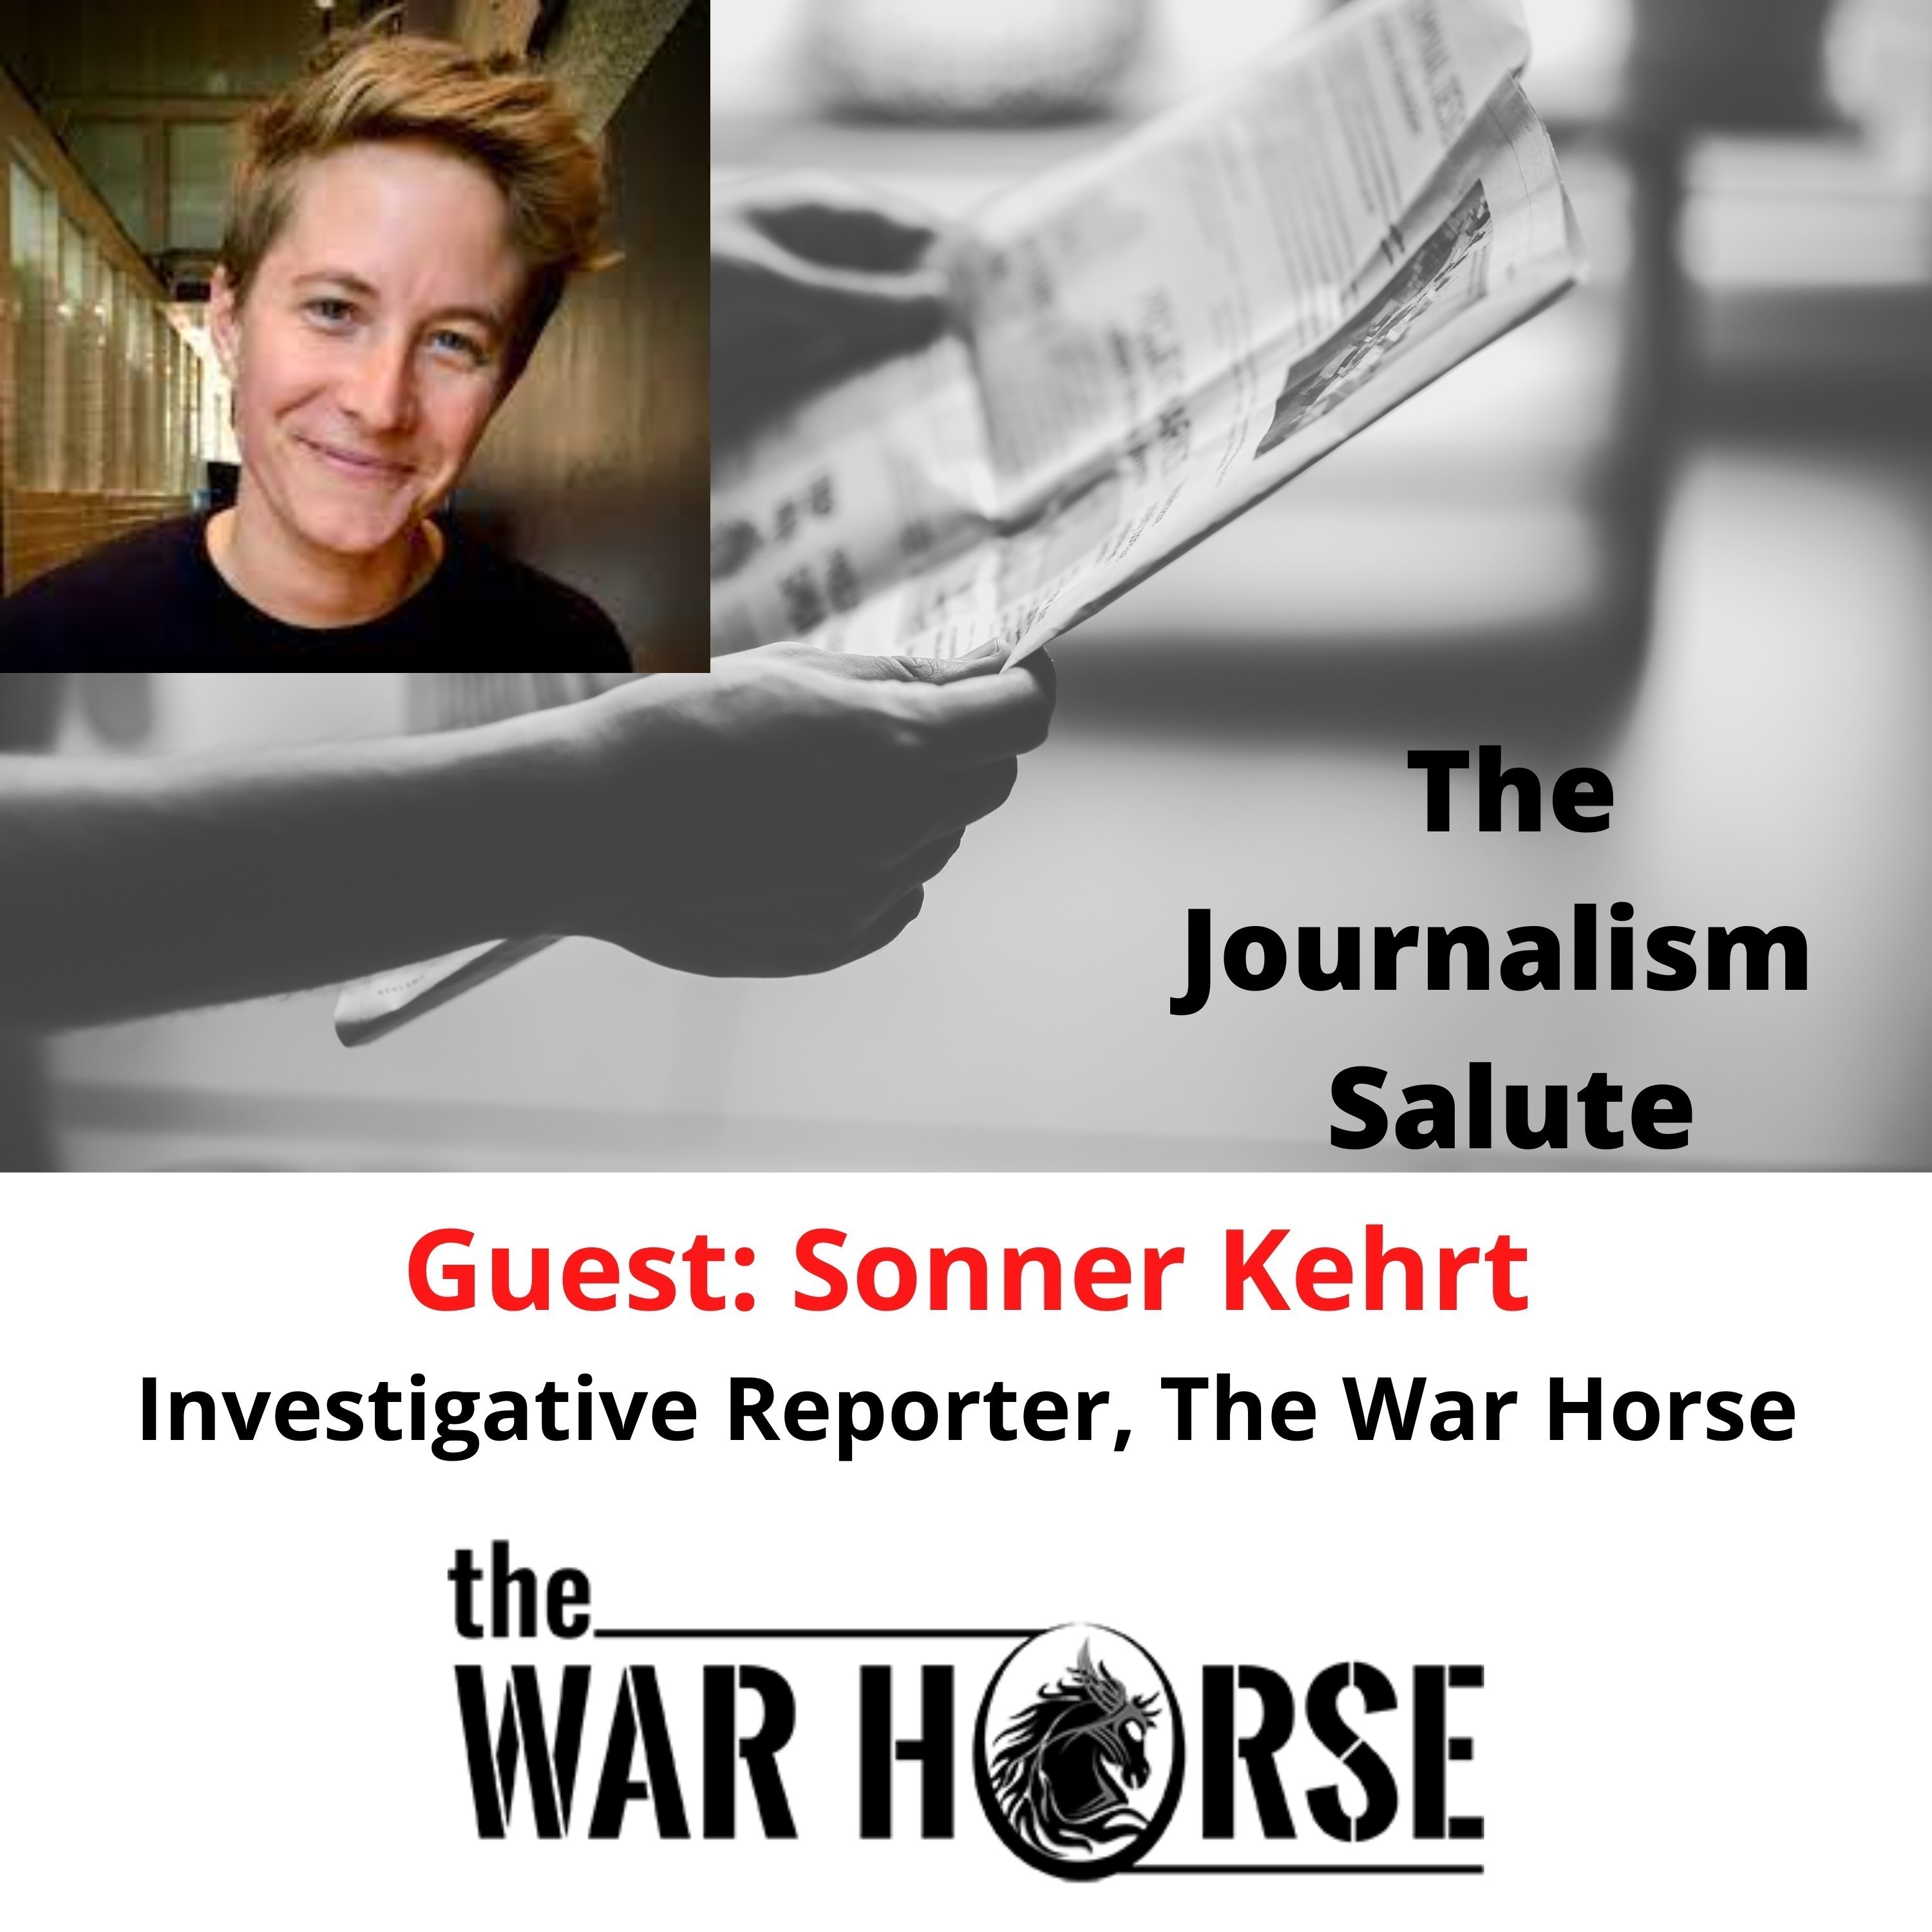 Sonner Kehrt, Investigative Reporter: The War Horse